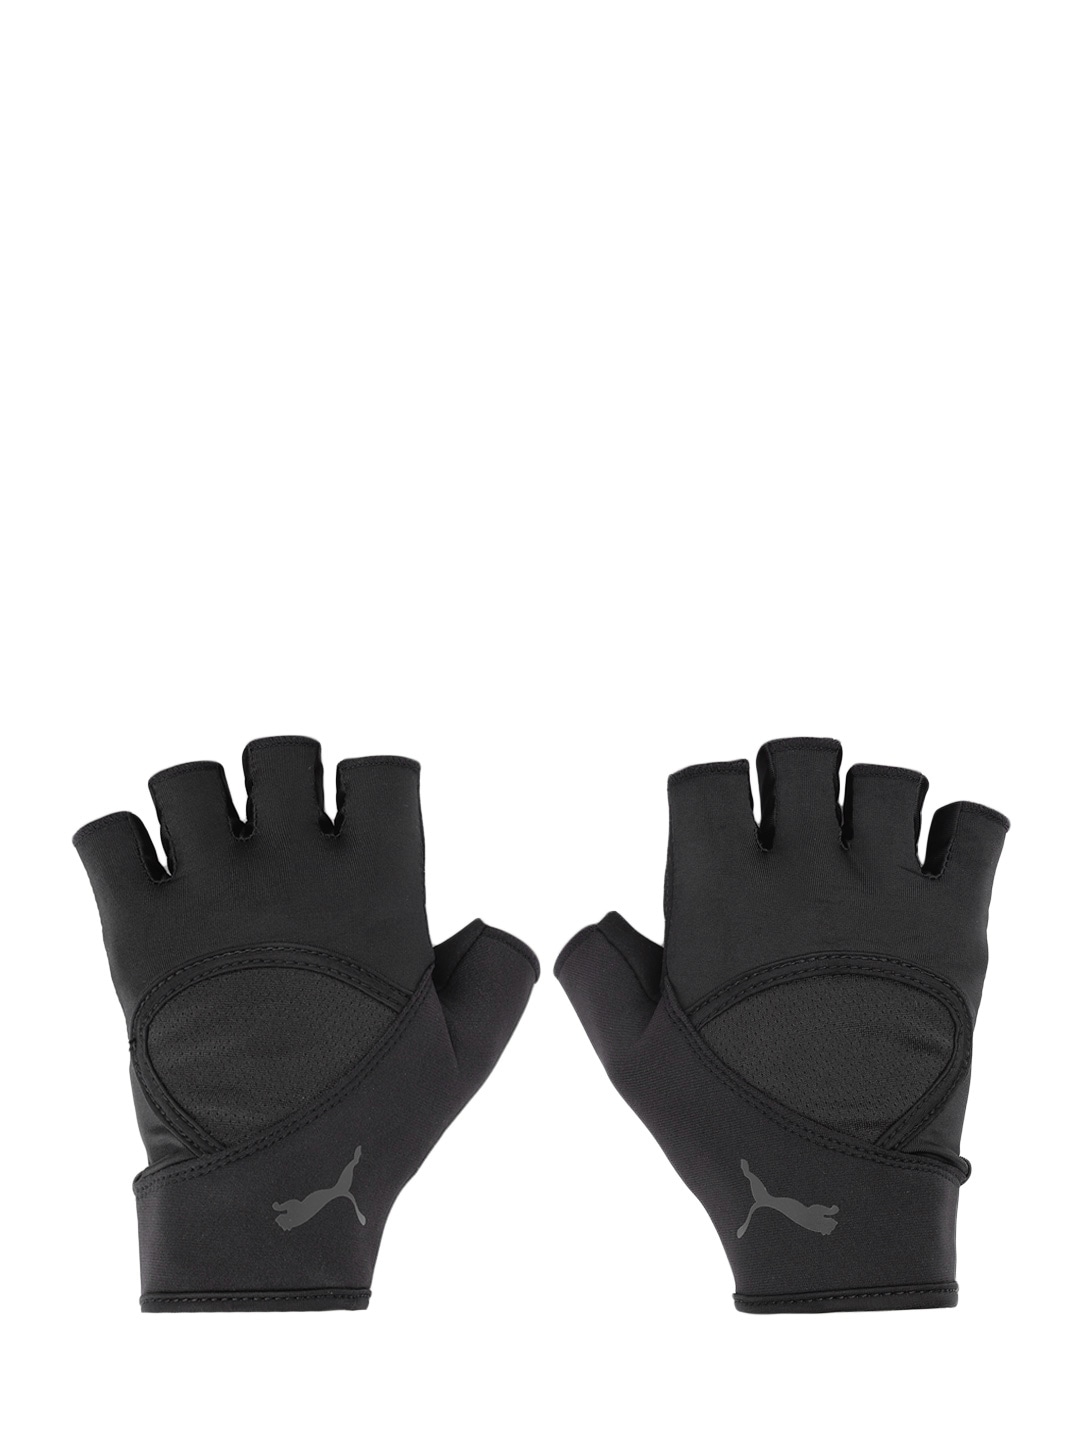 Accessories Gloves | Puma Unisex Black Training Essential Fingered Gloves - AL02025